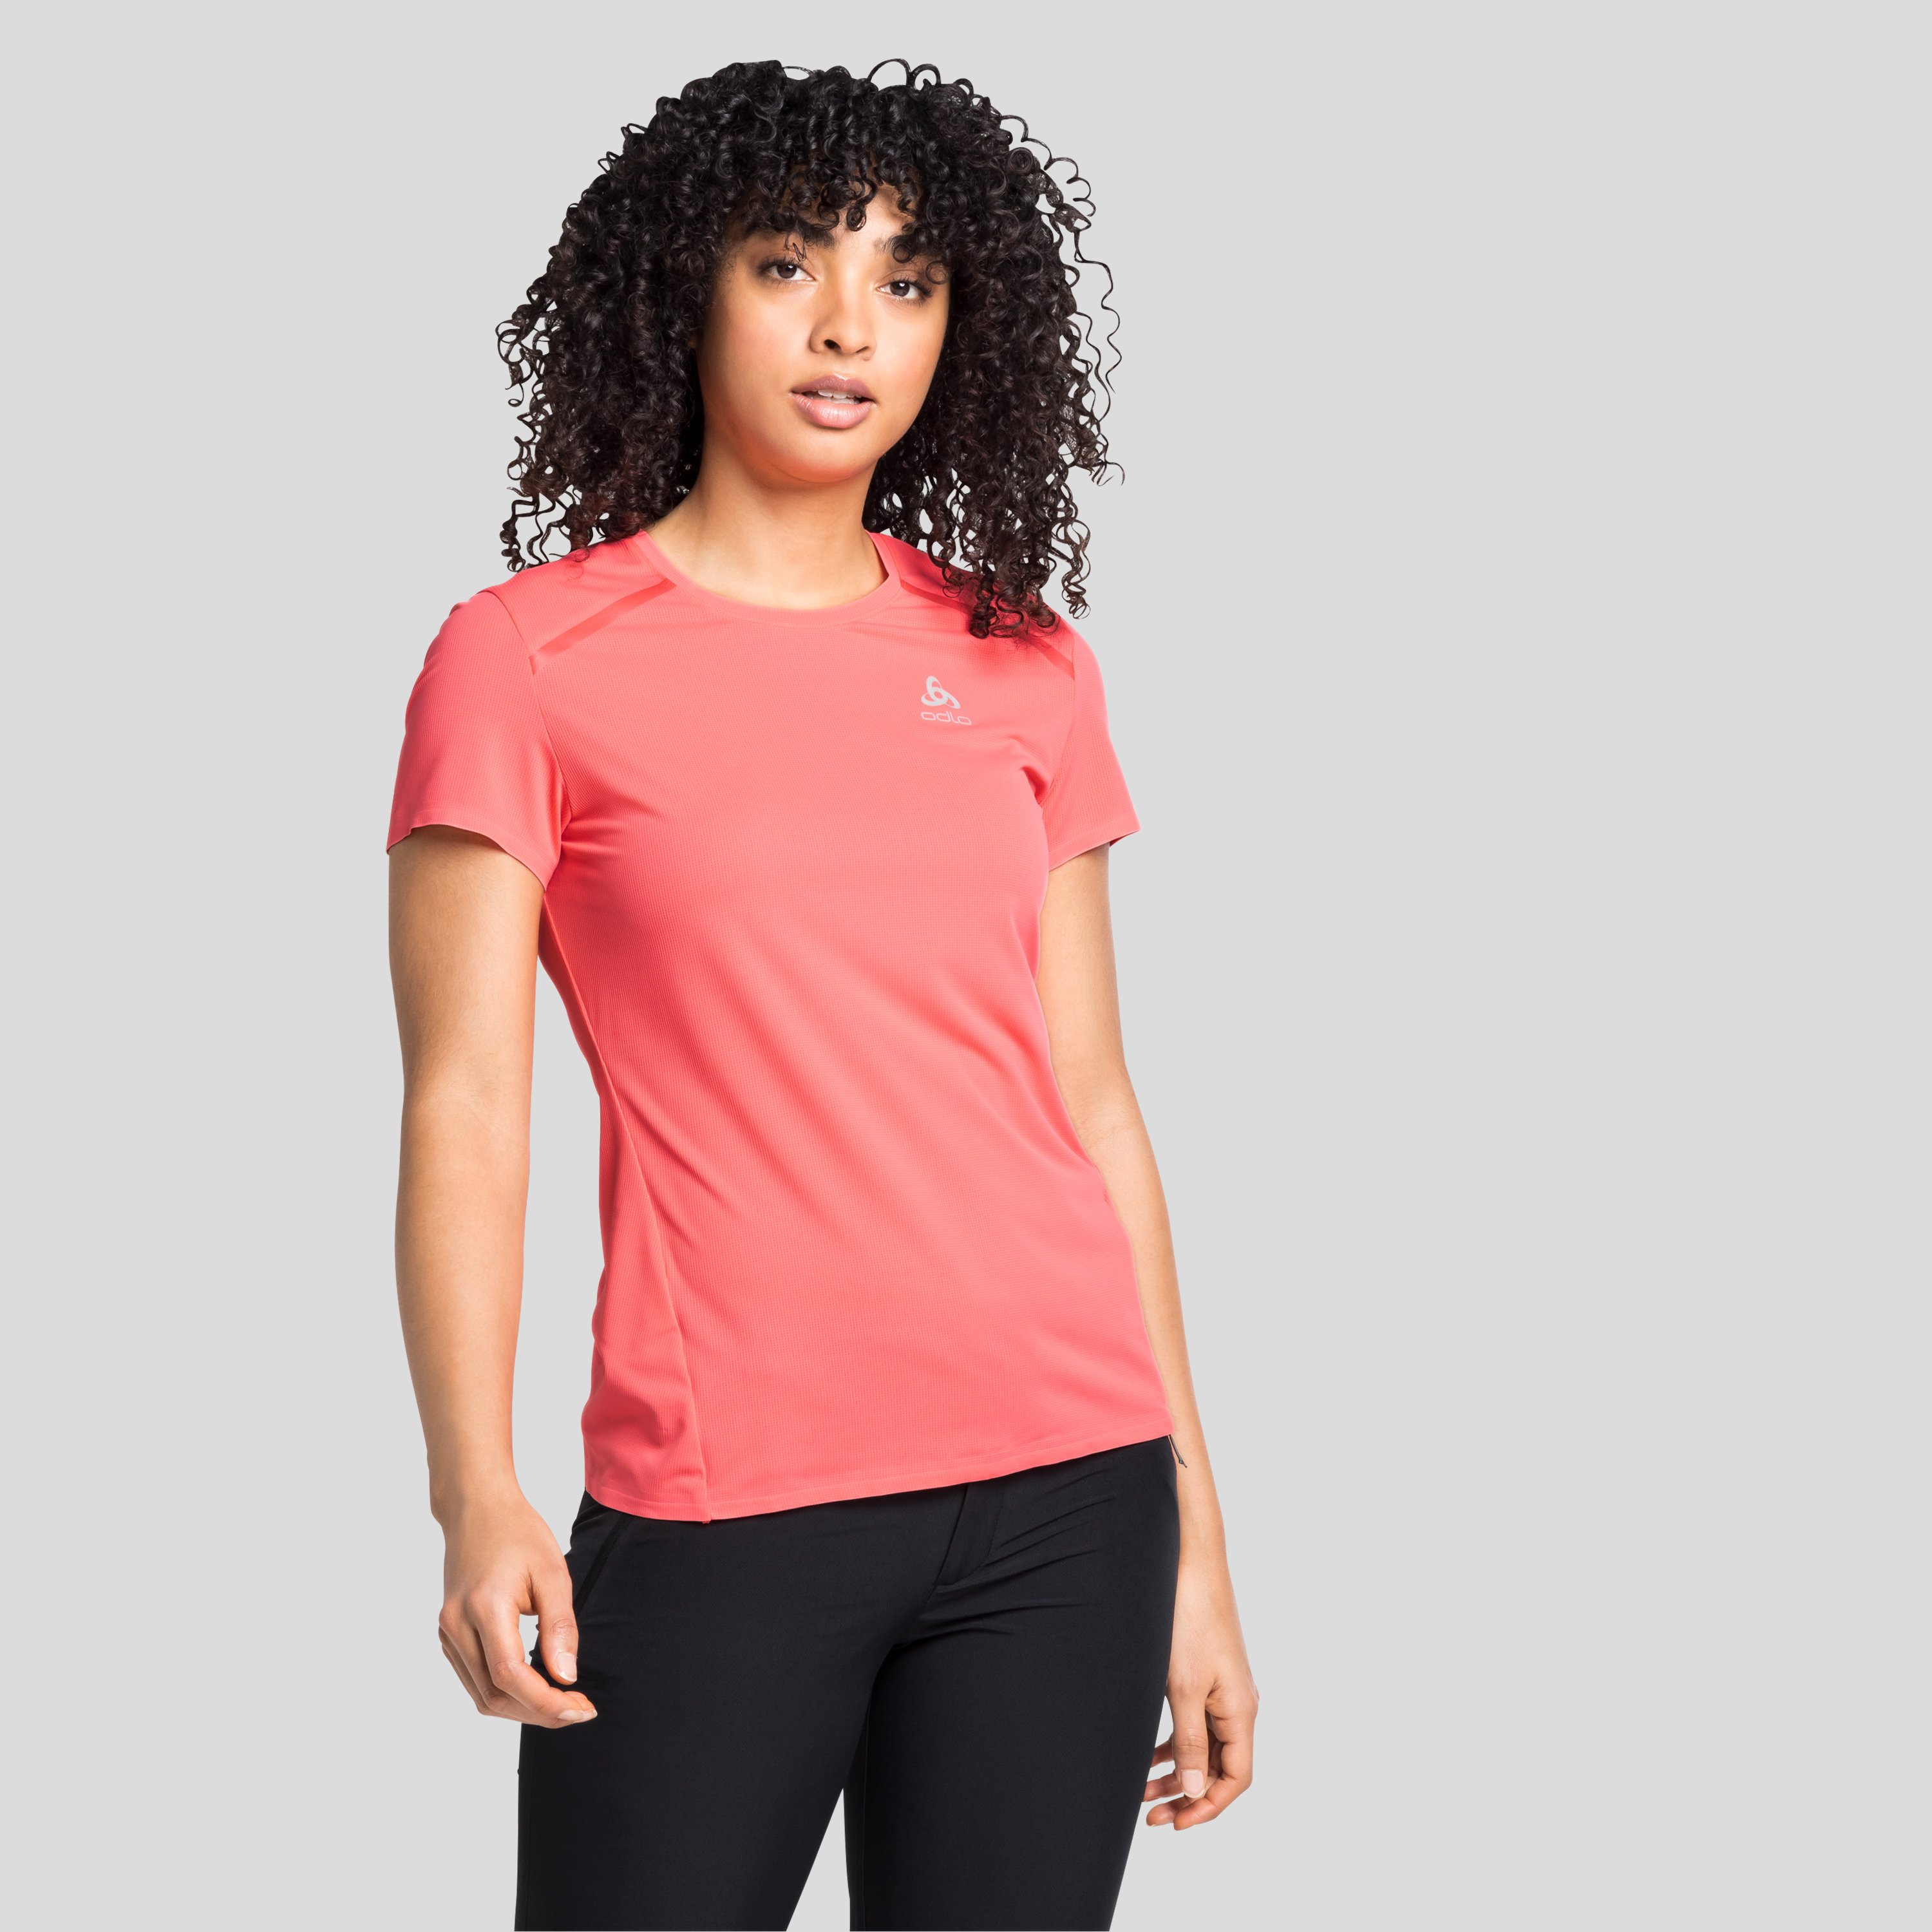 ODLO FLI Chill-Tec T-Shirt für Damen, S, rot